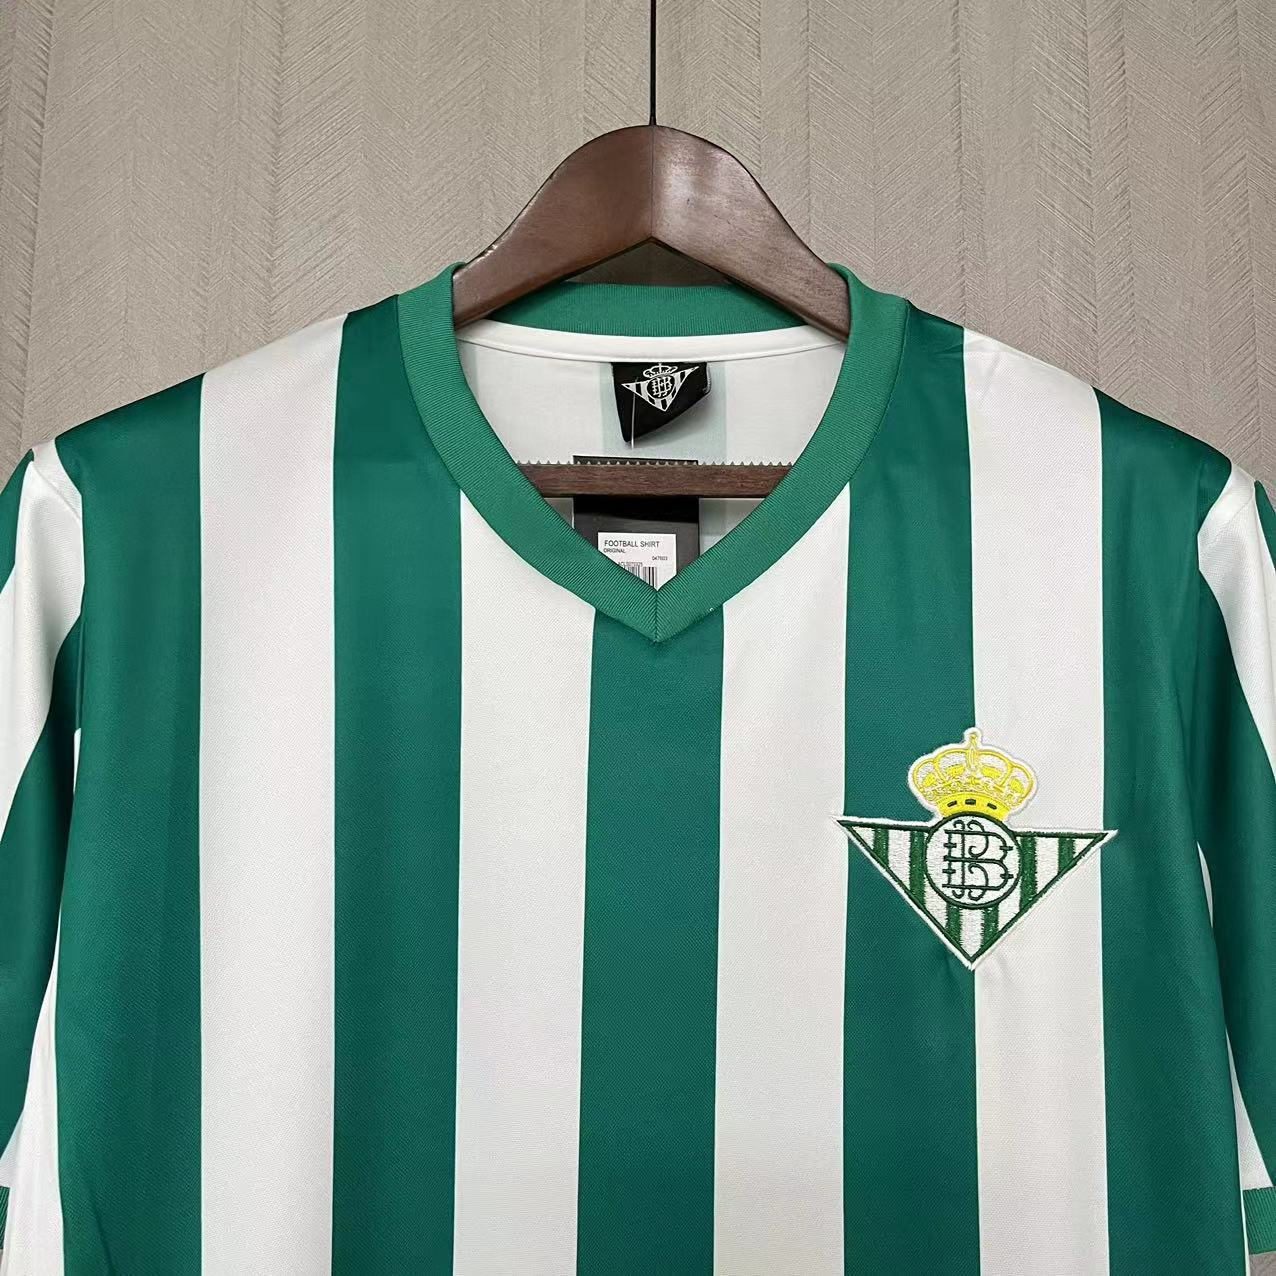 Retro Real Betis 1976-77 Home Jerseys Kit